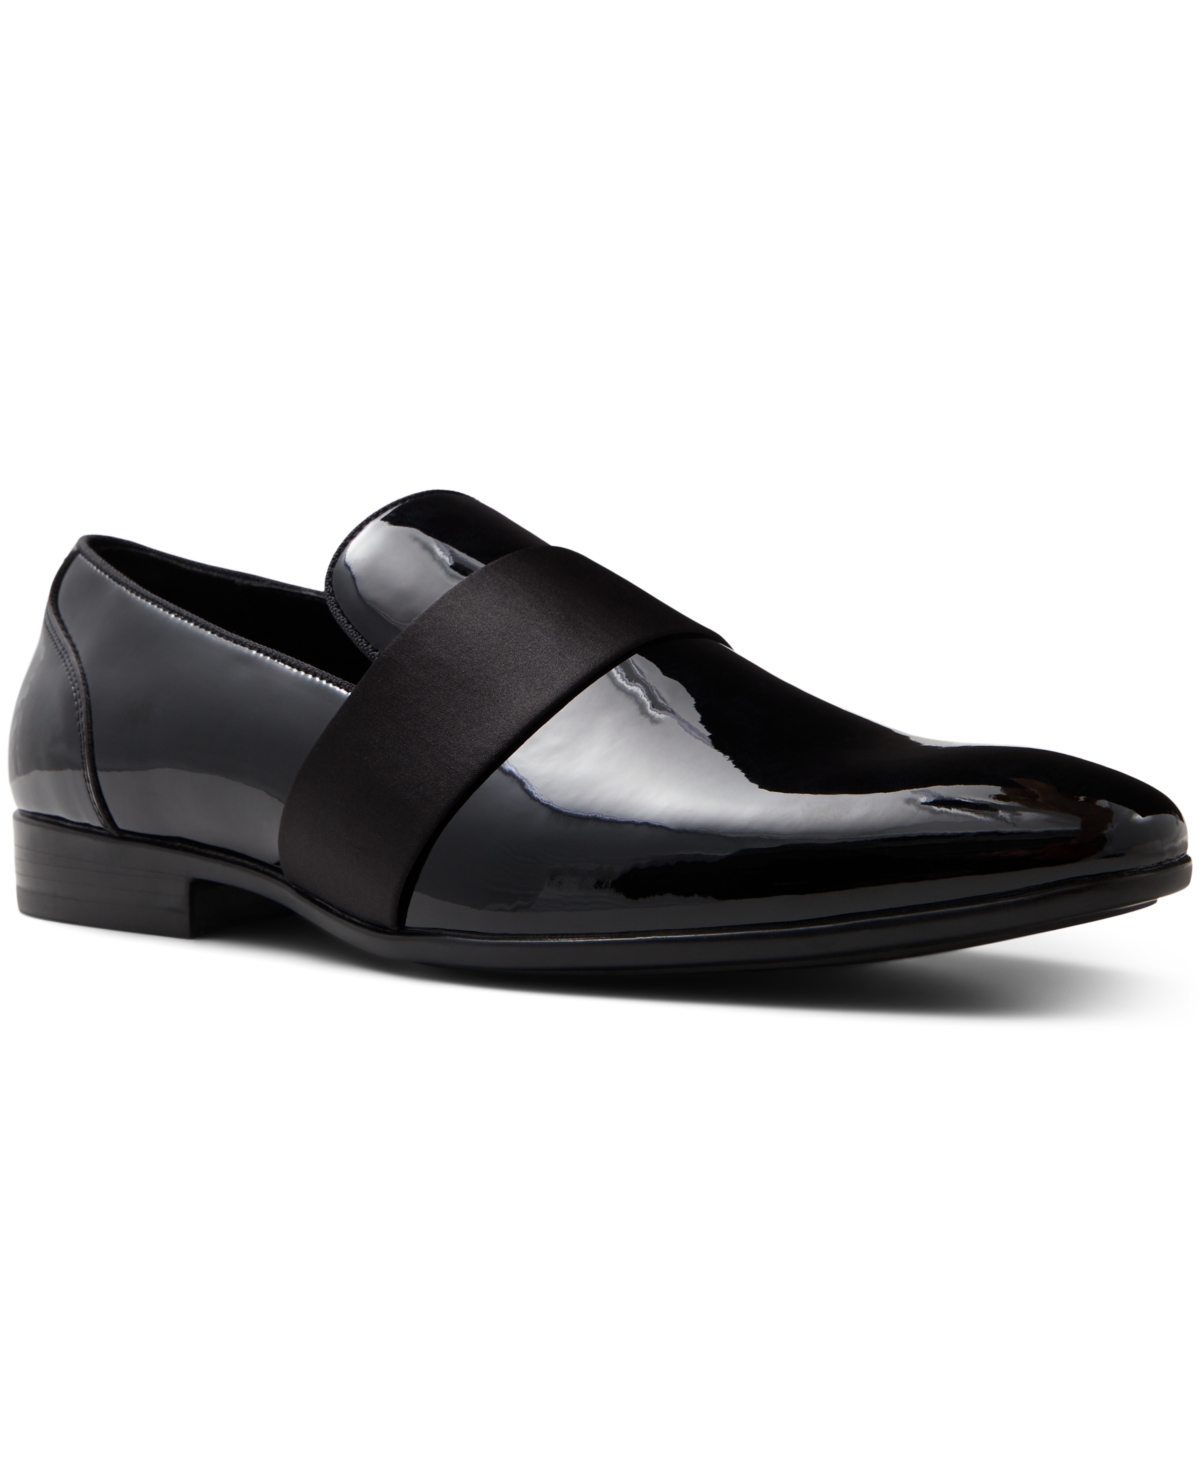 Men's Asaria Dress Loafers - Open Black